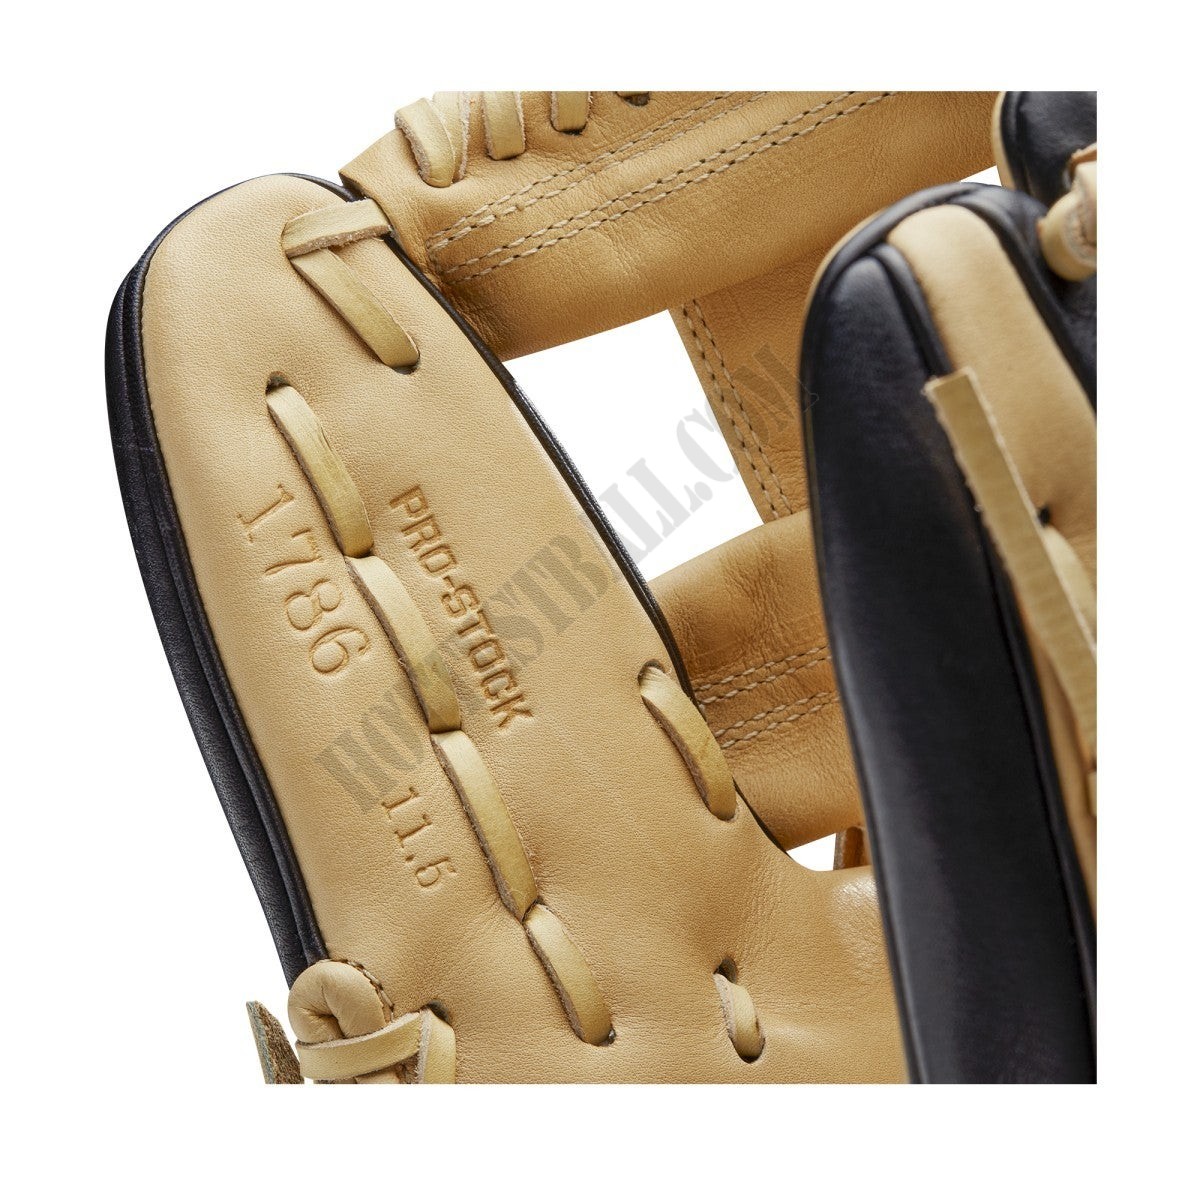 2021 A2000 1786 11.5" Infield Baseball Glove ● Wilson Promotions - -7